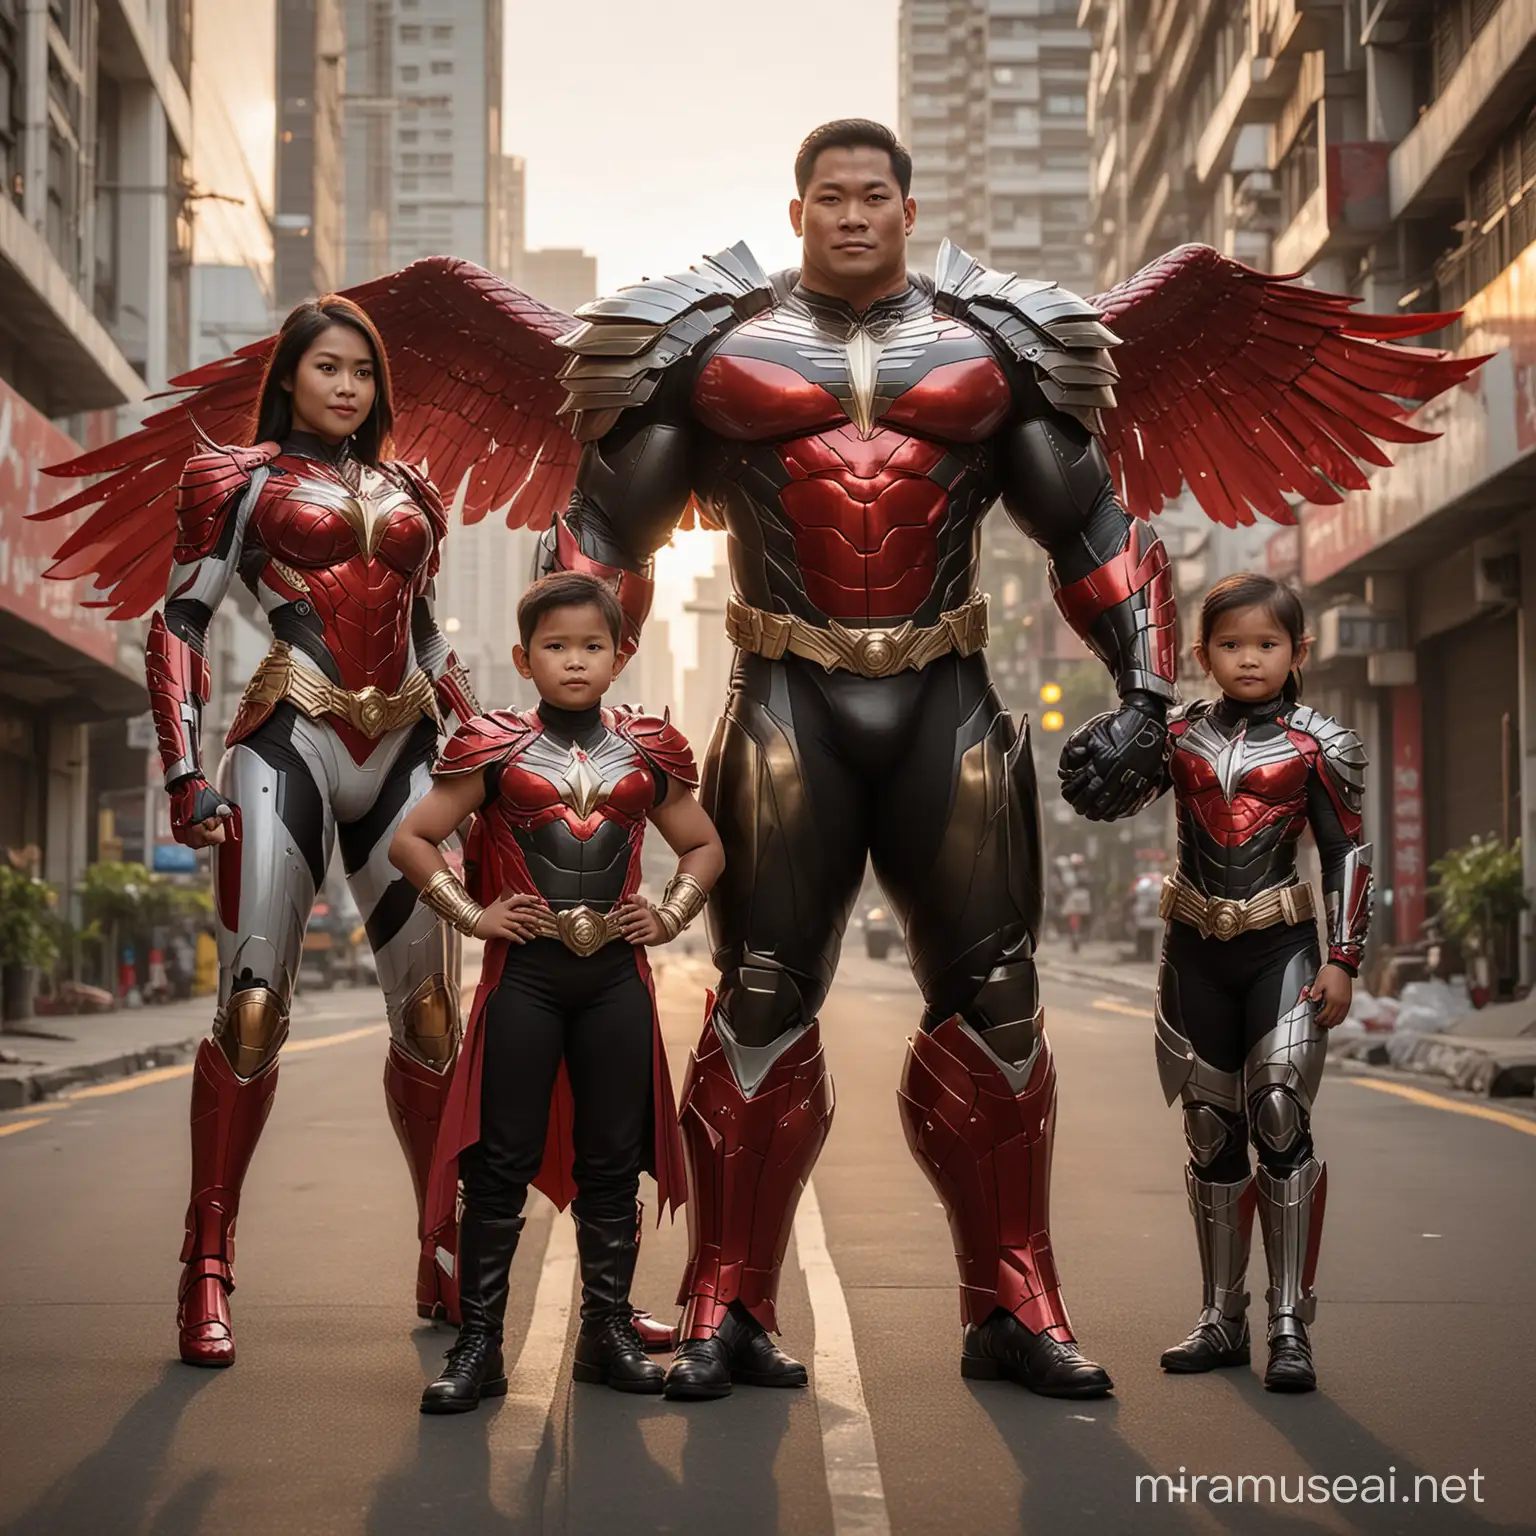 Indonesian Superhero Family Soars Over Urban Landscape at Golden Hour